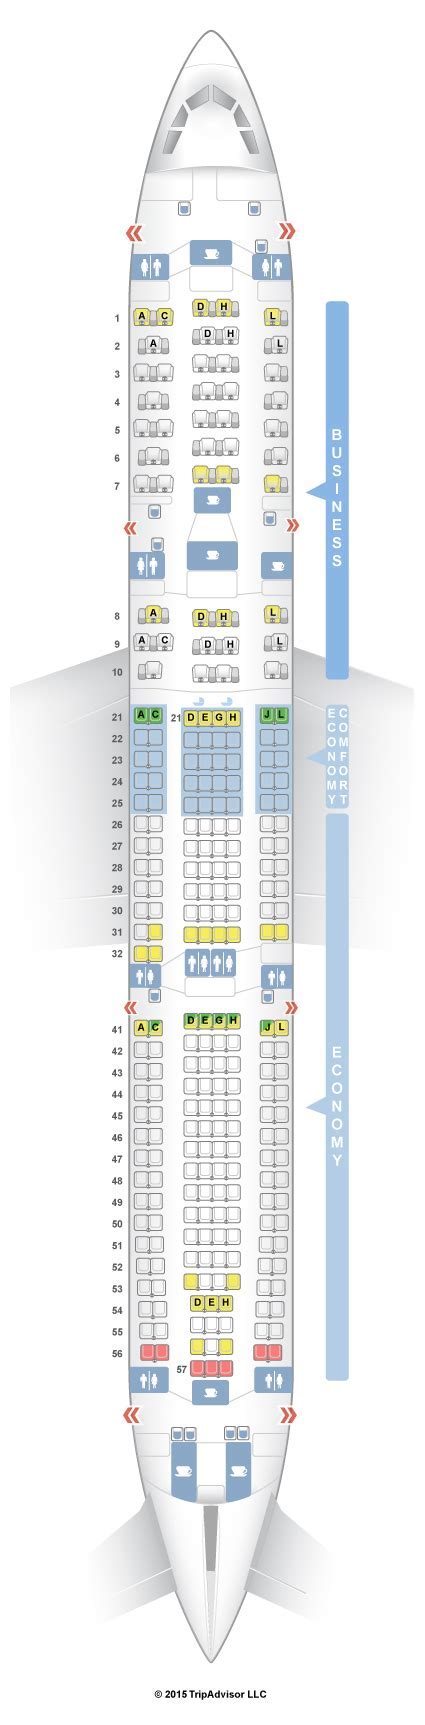 A350 900 Finnair Seat Map Finnairs A350 900 Features A Two Class